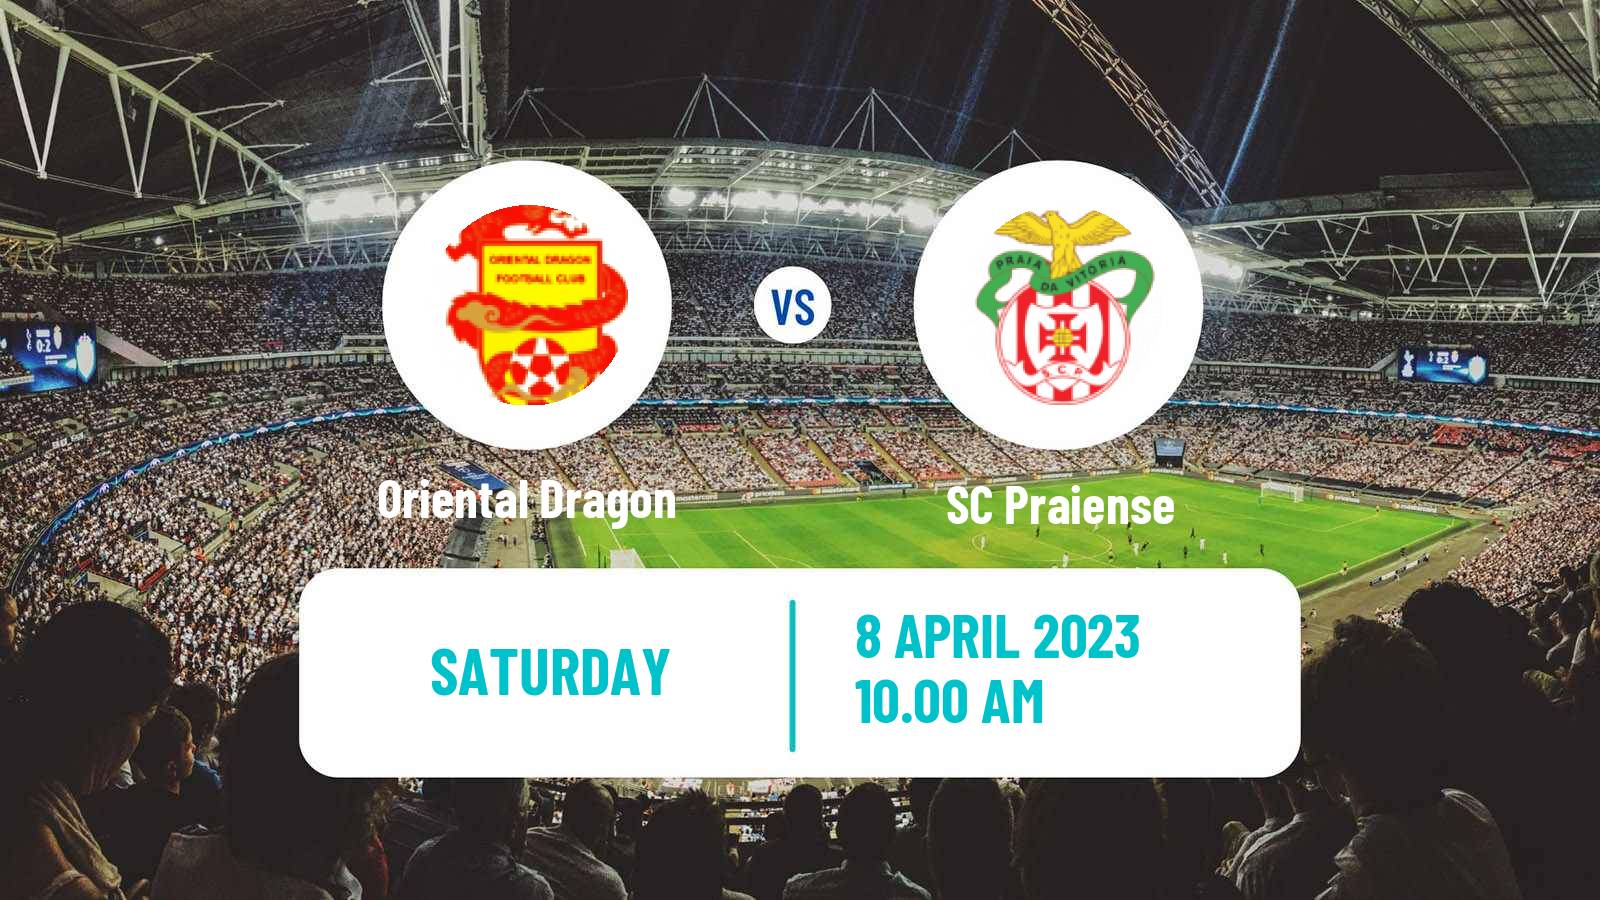 Soccer Campeonato de Portugal Oriental Dragon - Praiense